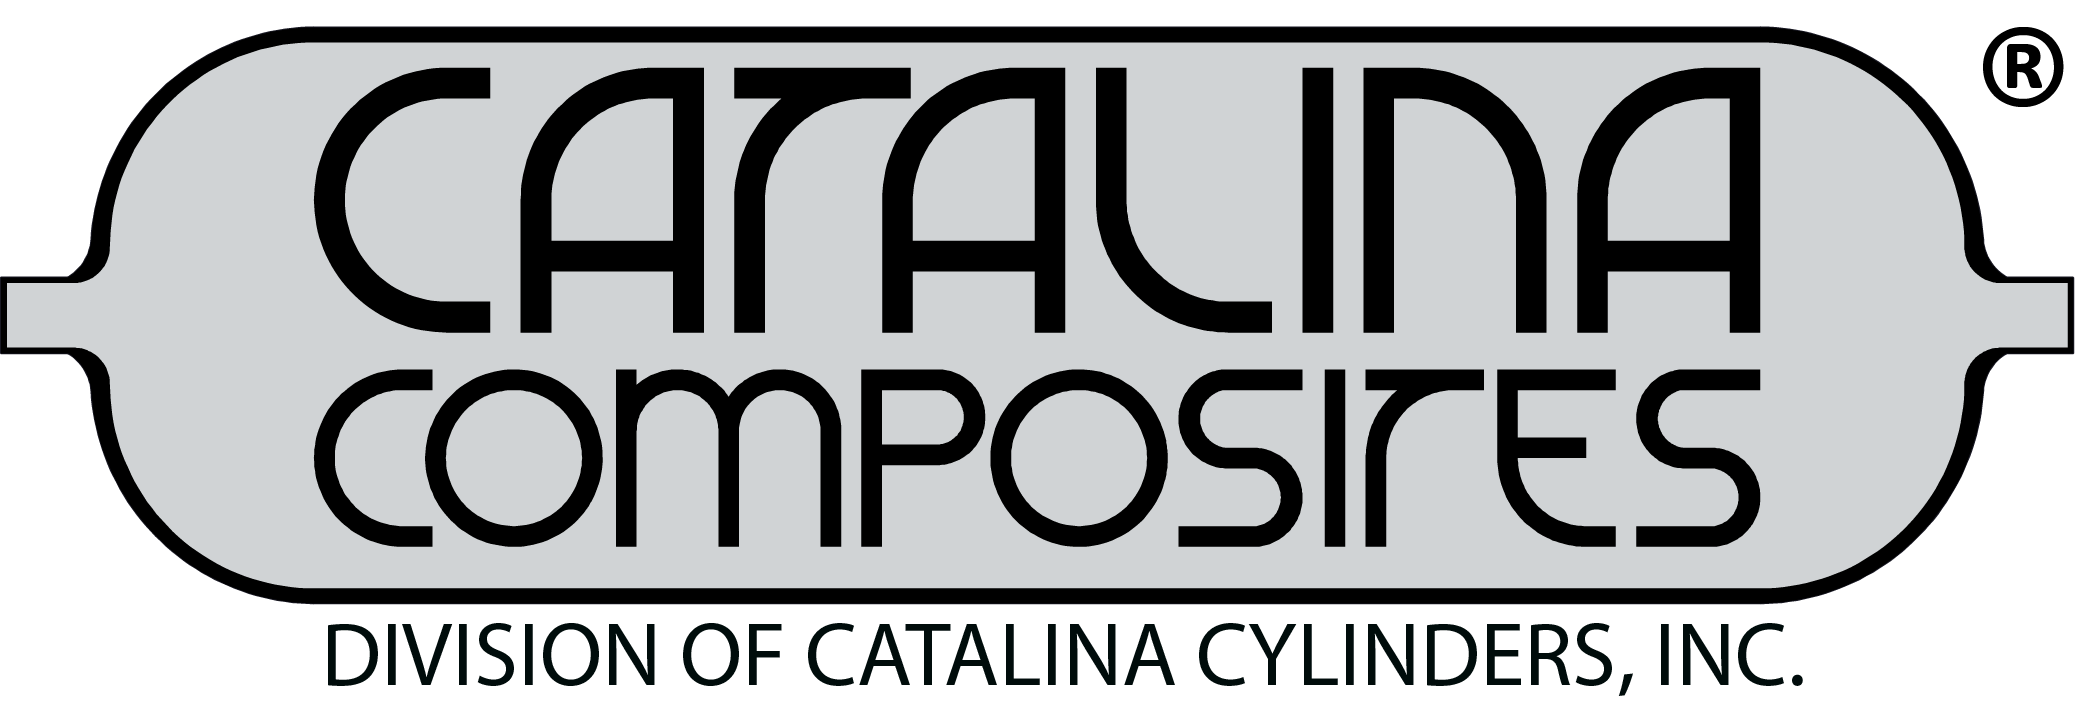 CatalinaComposites Logo